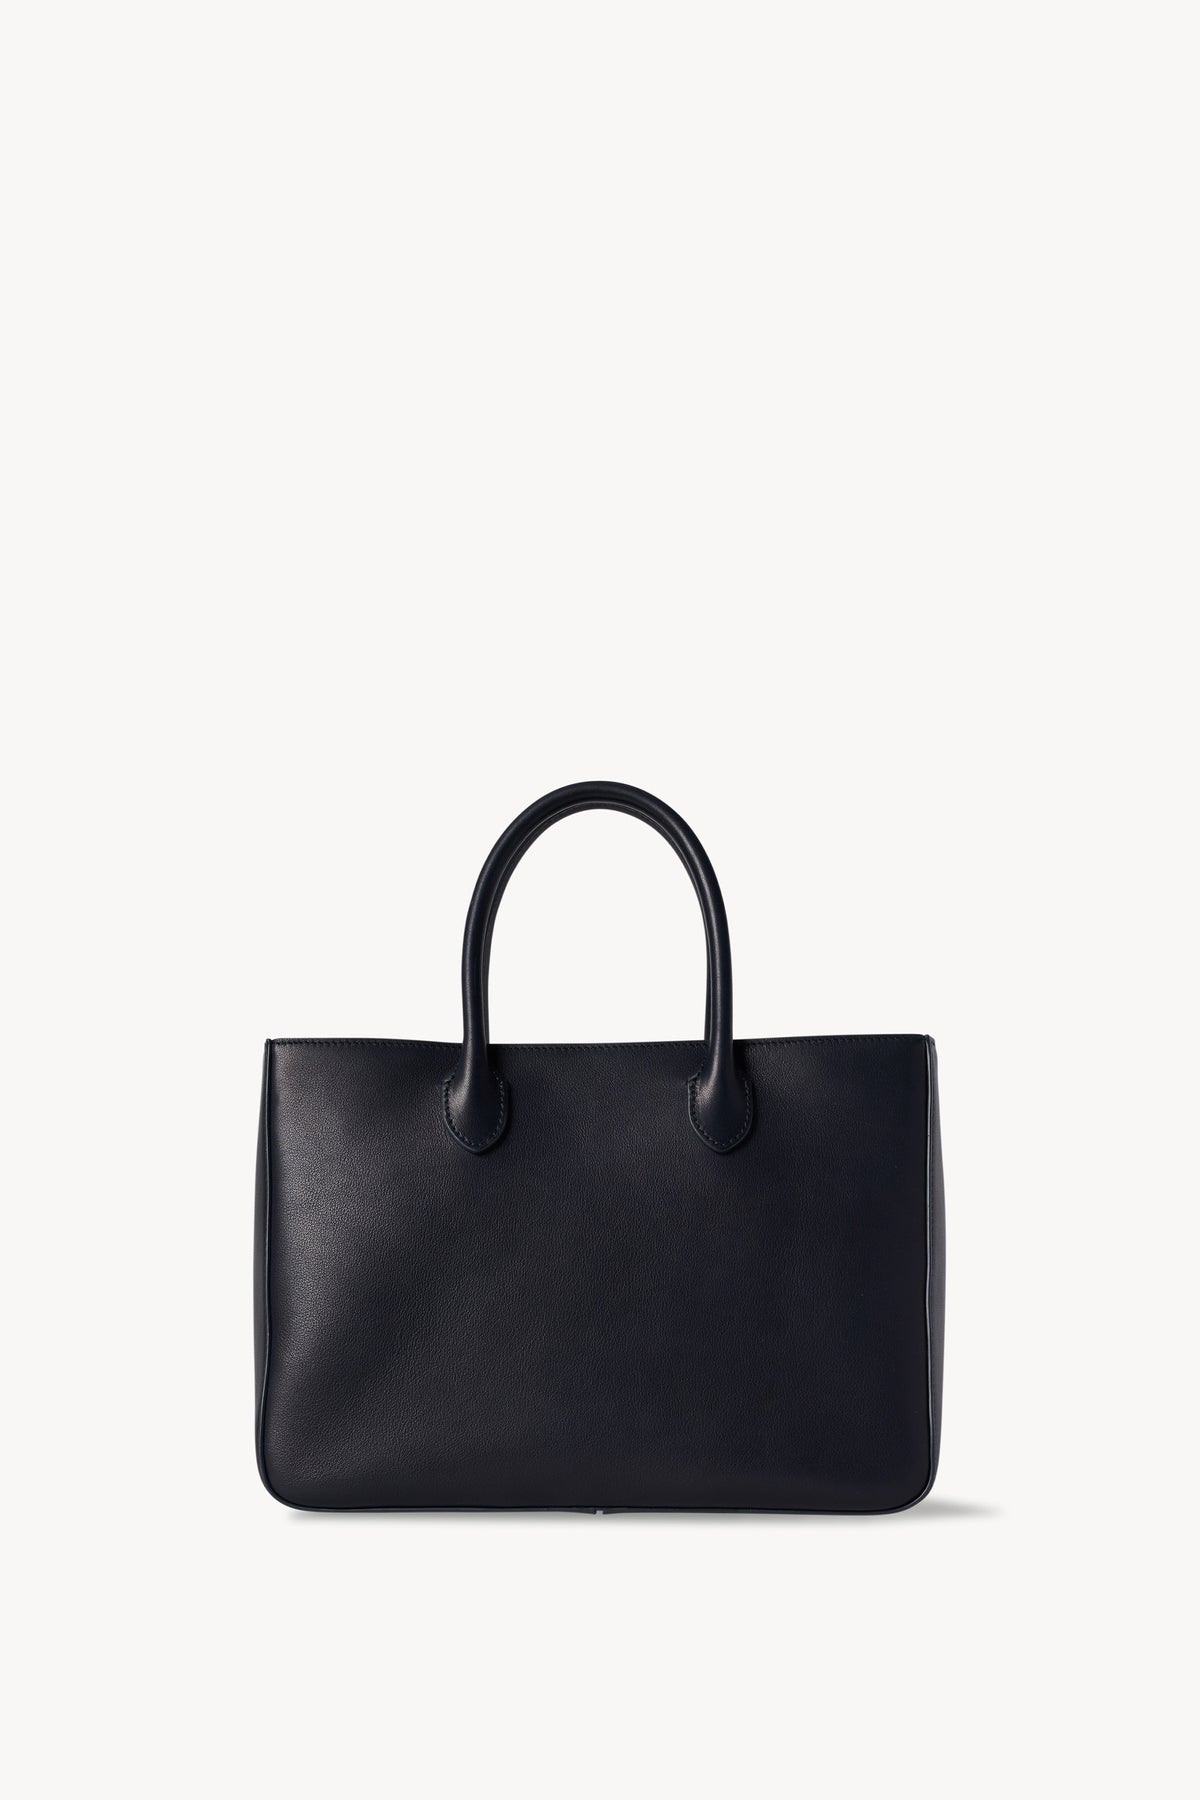 E/W YSL Monogram Leather Shopping Tote Bag